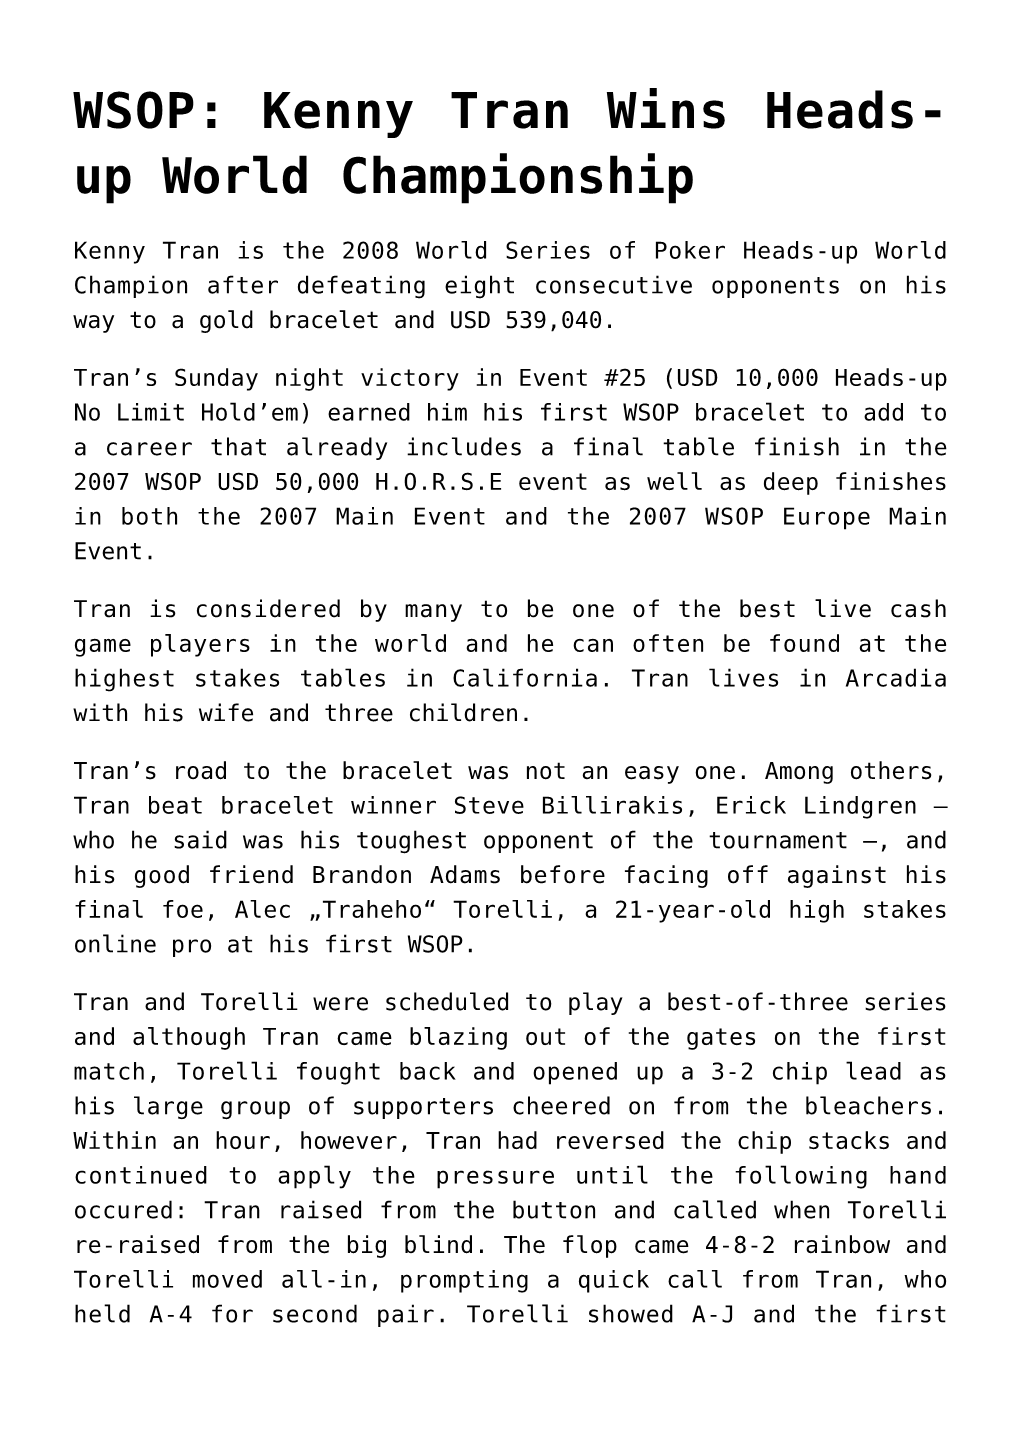 WSOP: Kenny Tran Wins Heads-Up World Championship